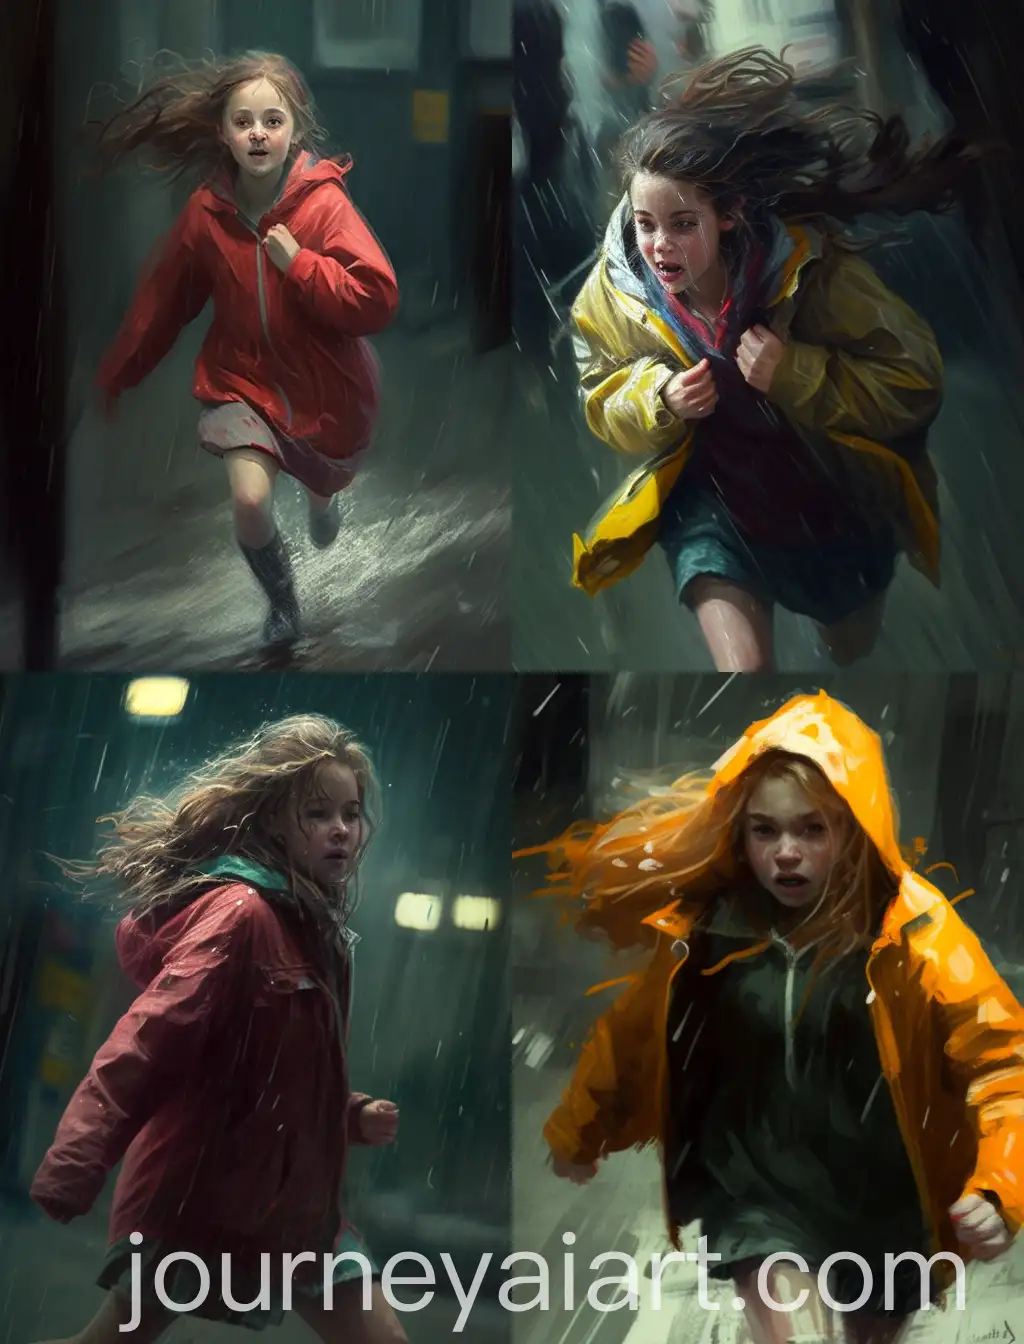 Girl-Seeking-Shelter-from-Rainstorm